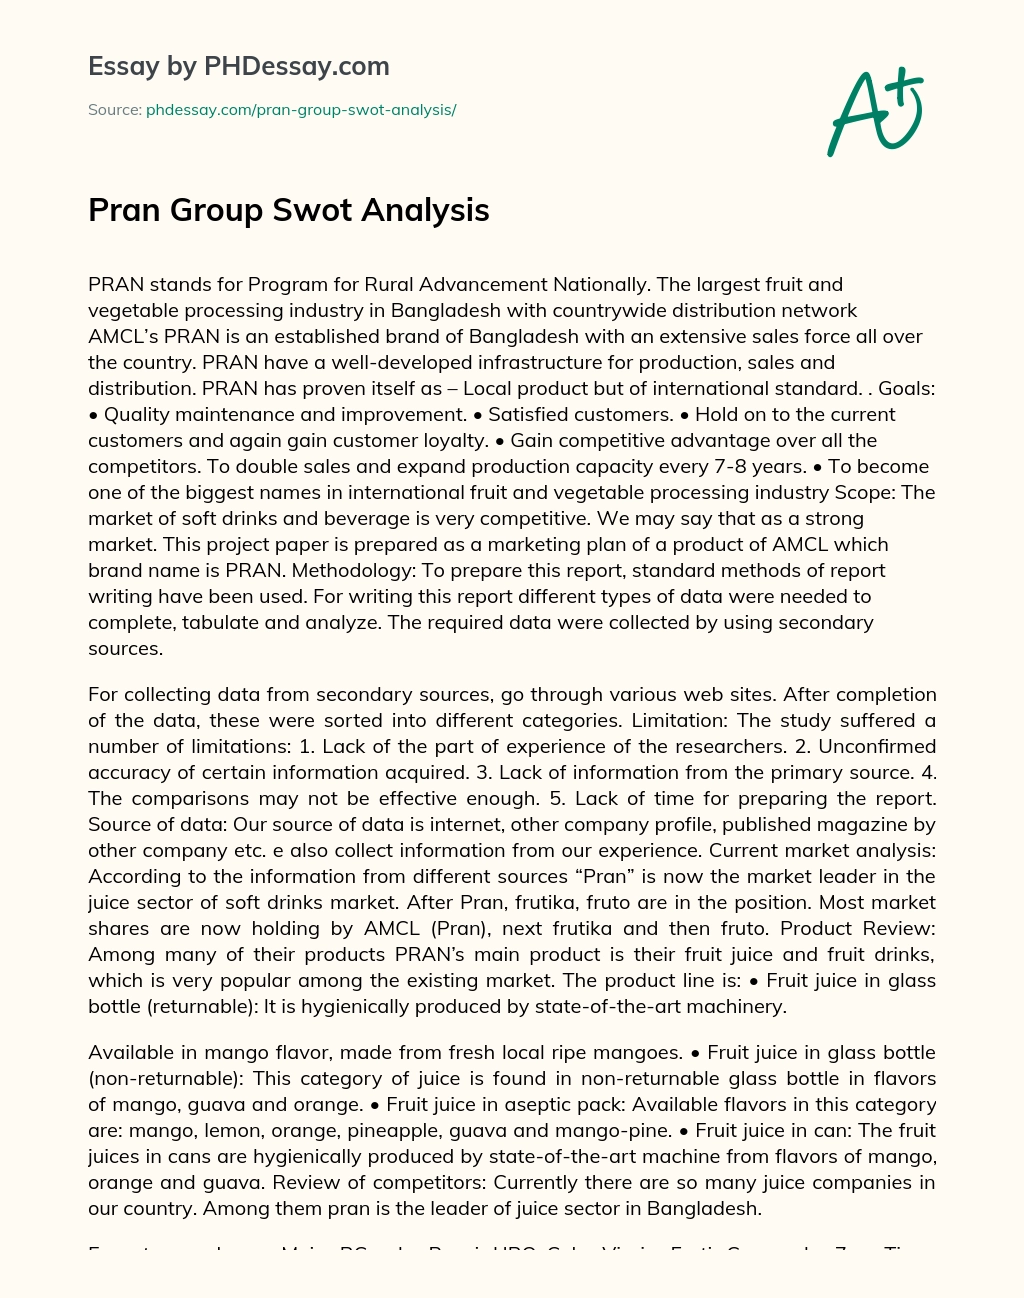 Pran Group Swot Analysis essay